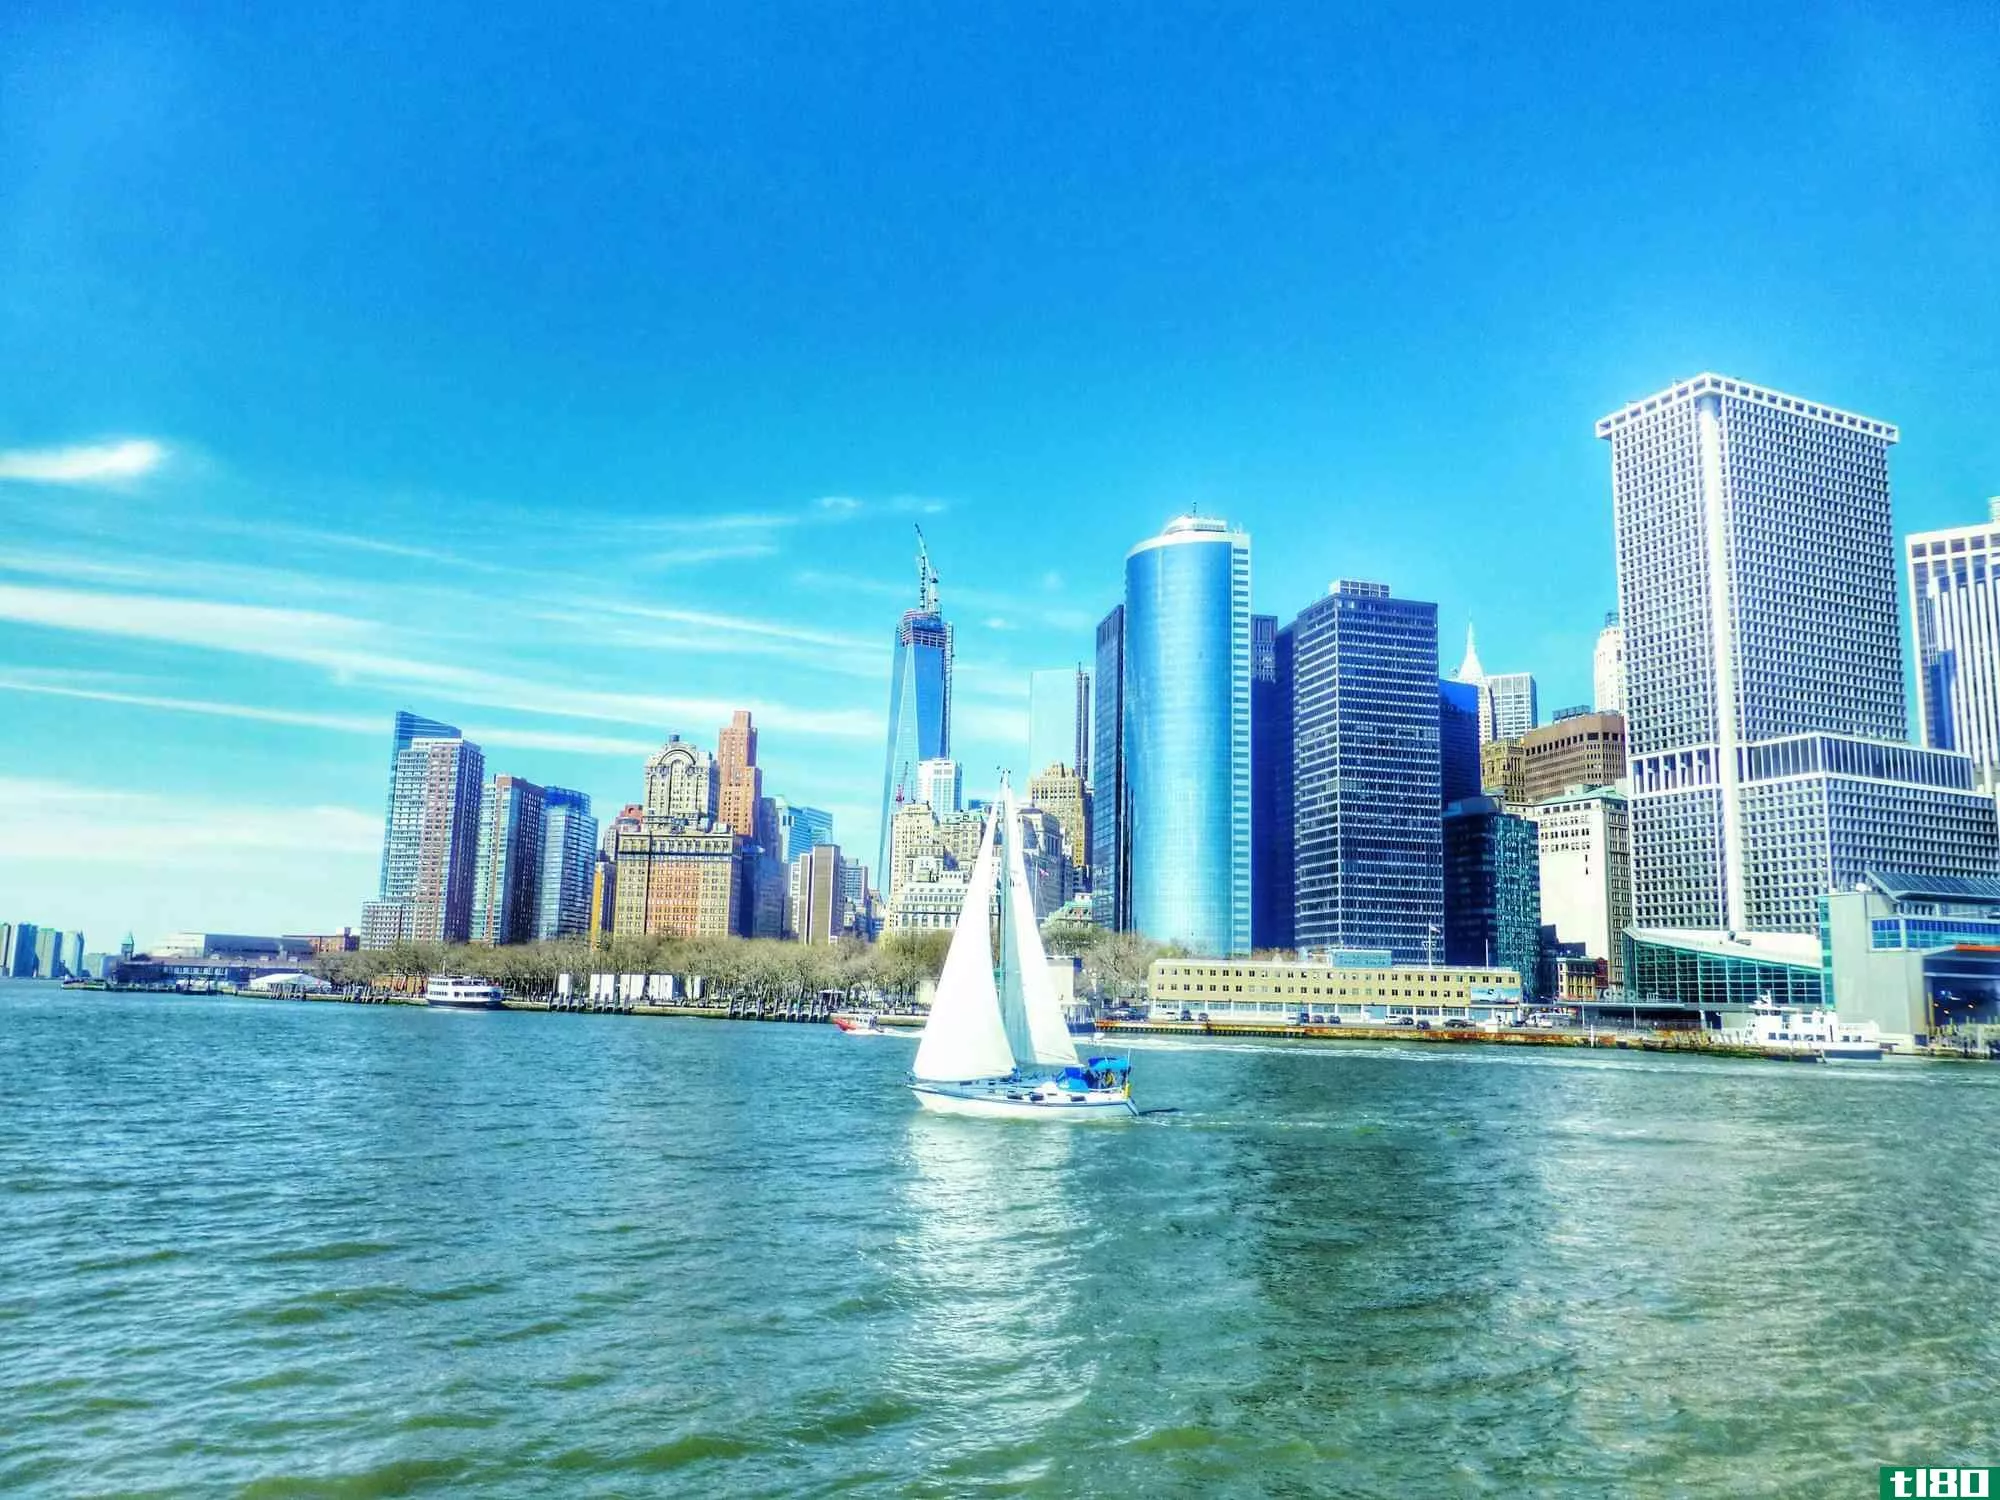 Sailboat on East River by Manhattan skyline, New York City.